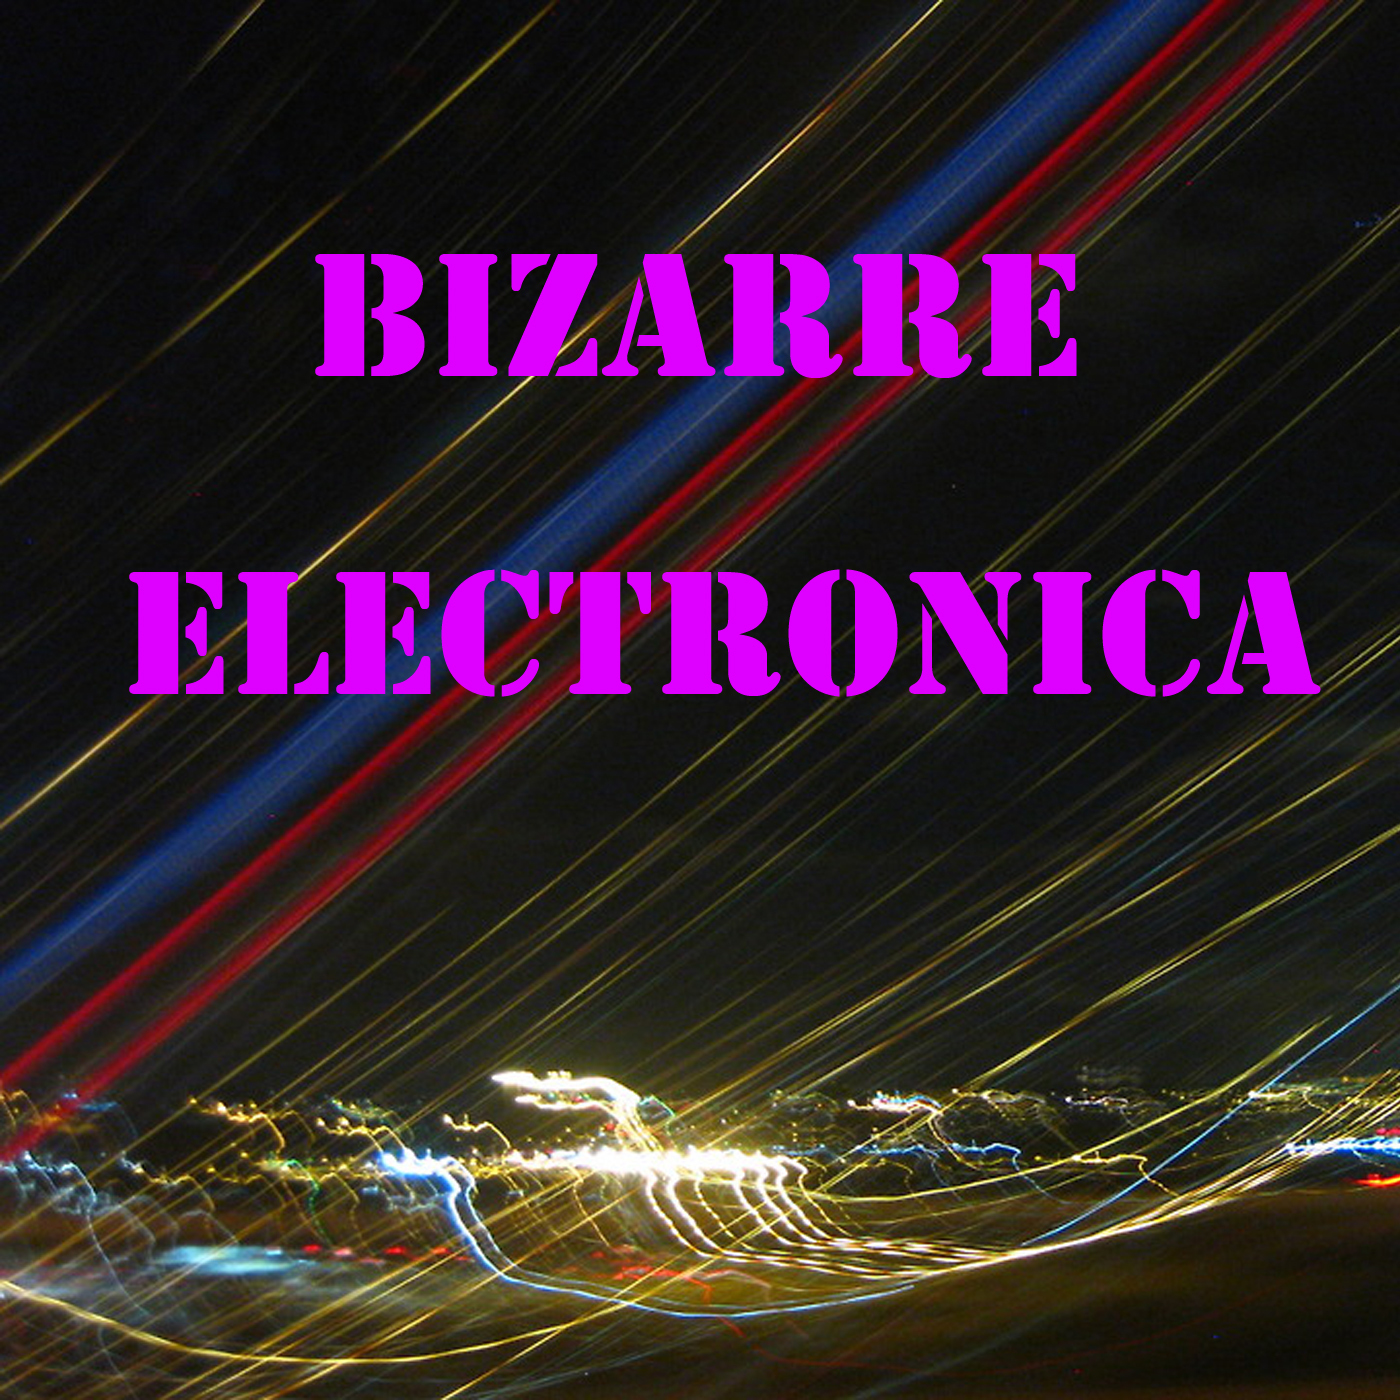 Bizarre Electronica Vol. 2